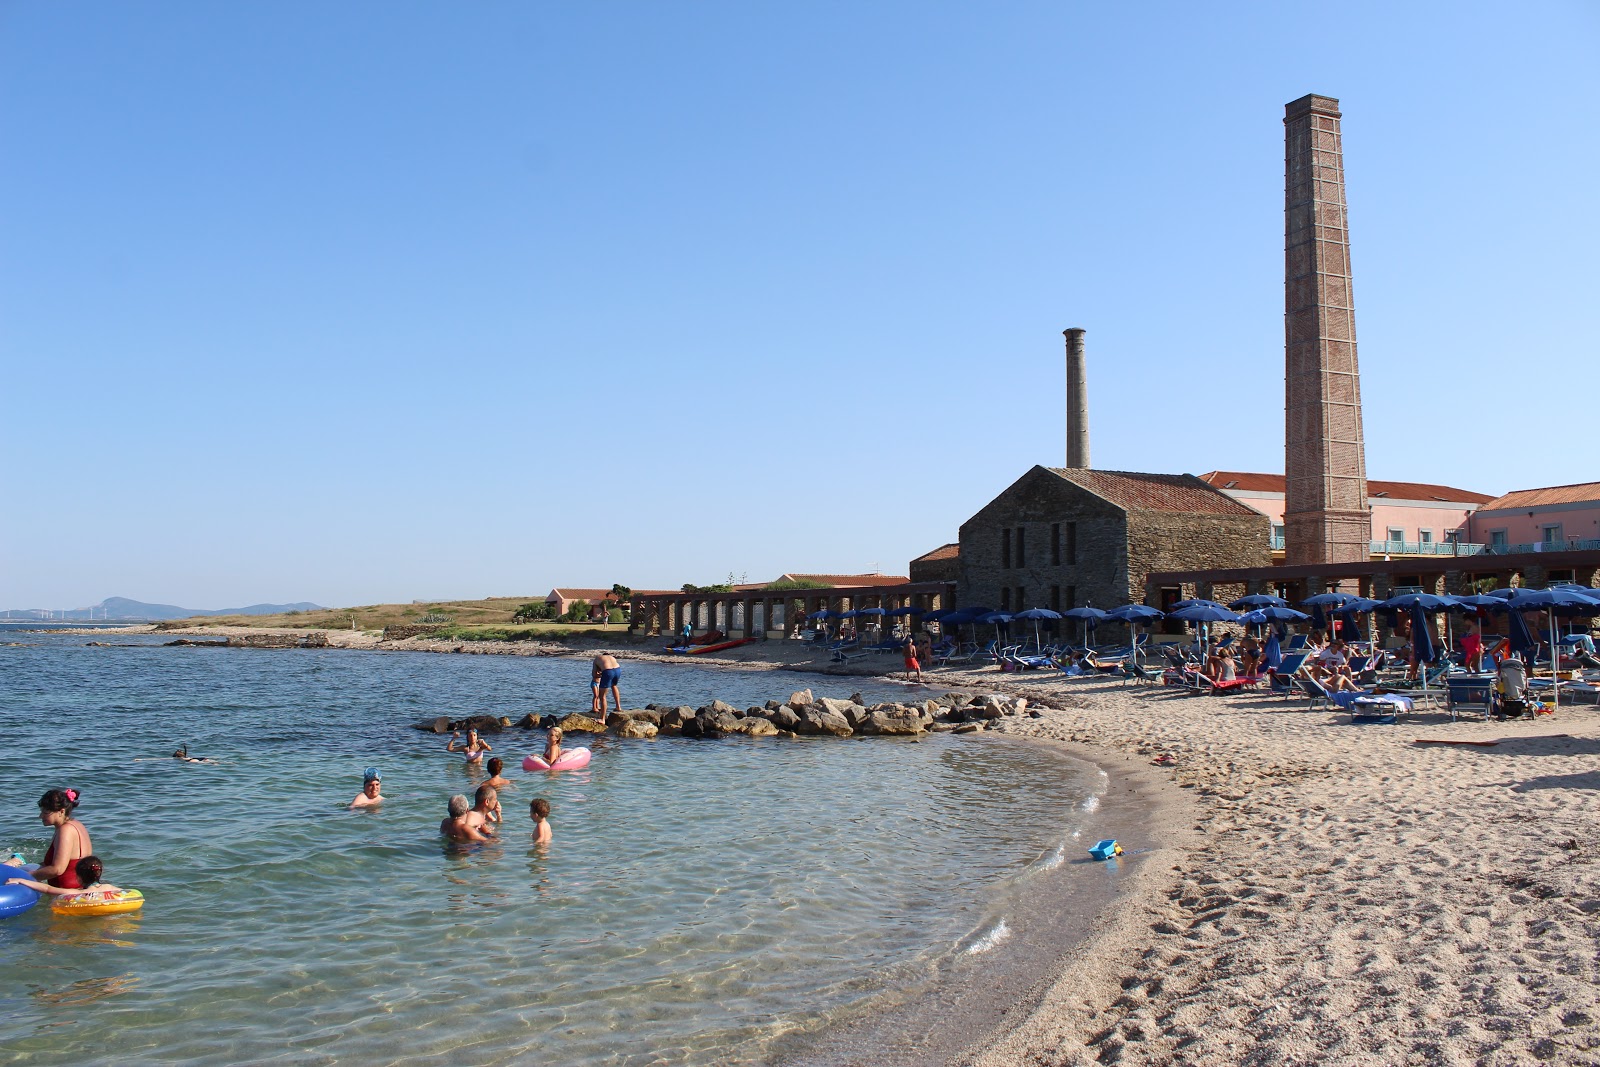 Spiaggia delle Tonnare'in fotoğrafı turkuaz saf su yüzey ile